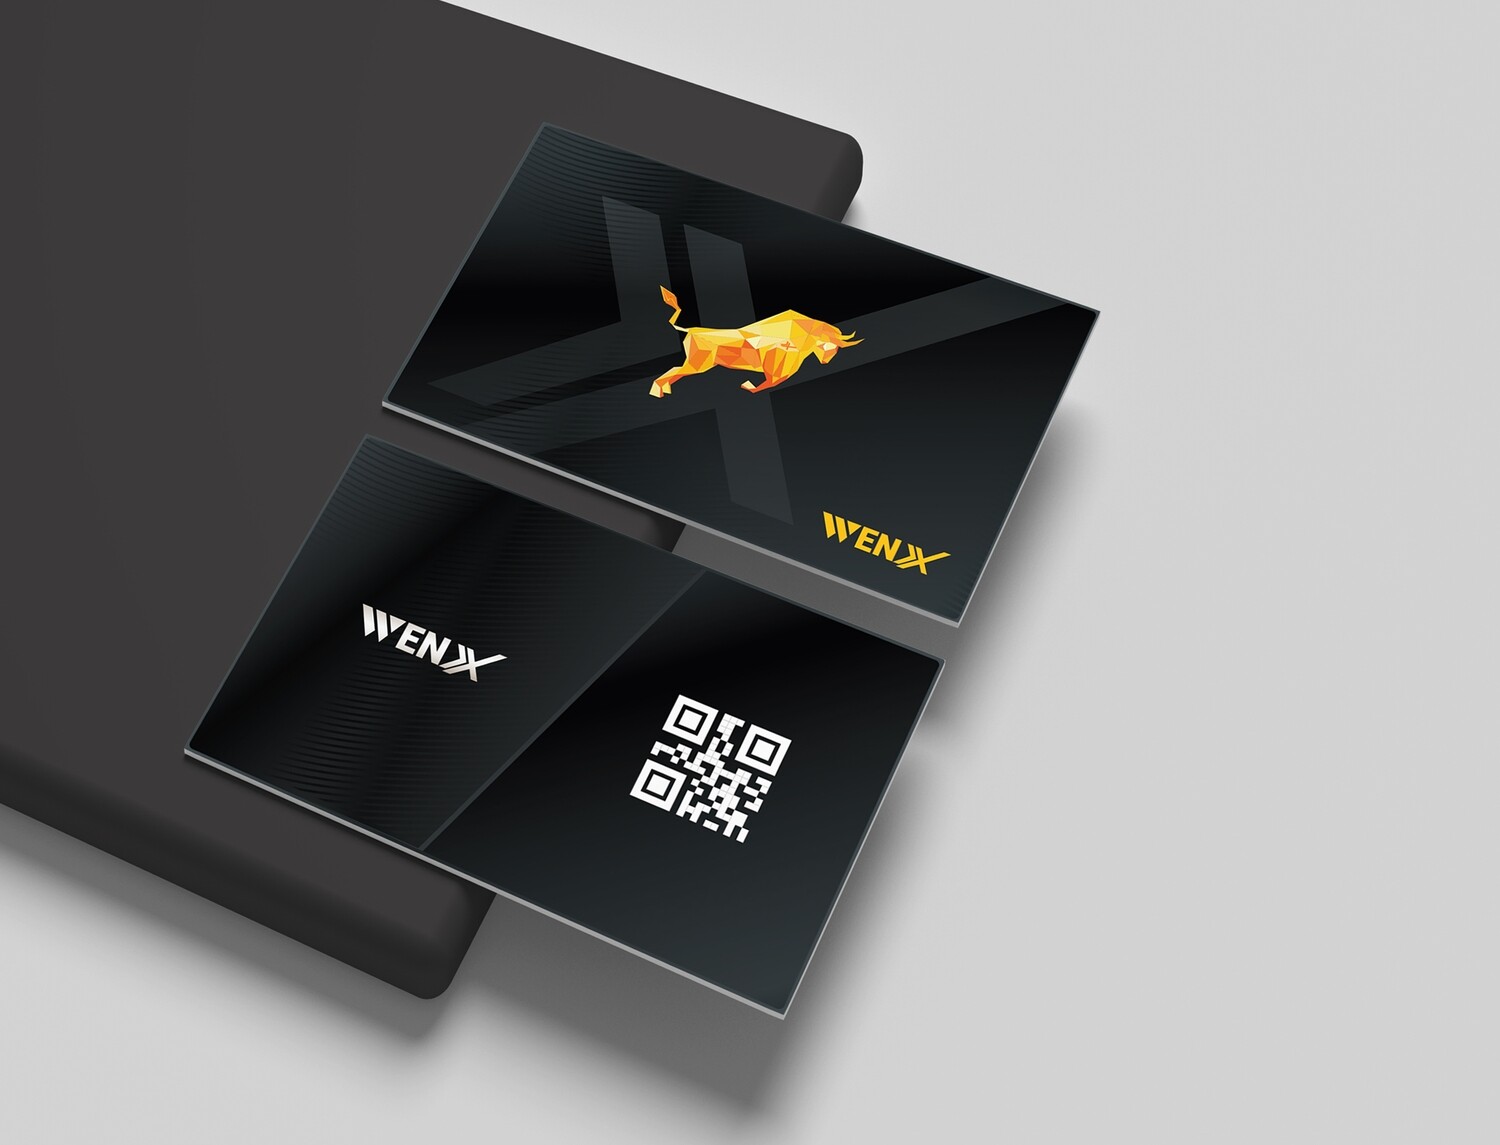 WenX NFC Business Card